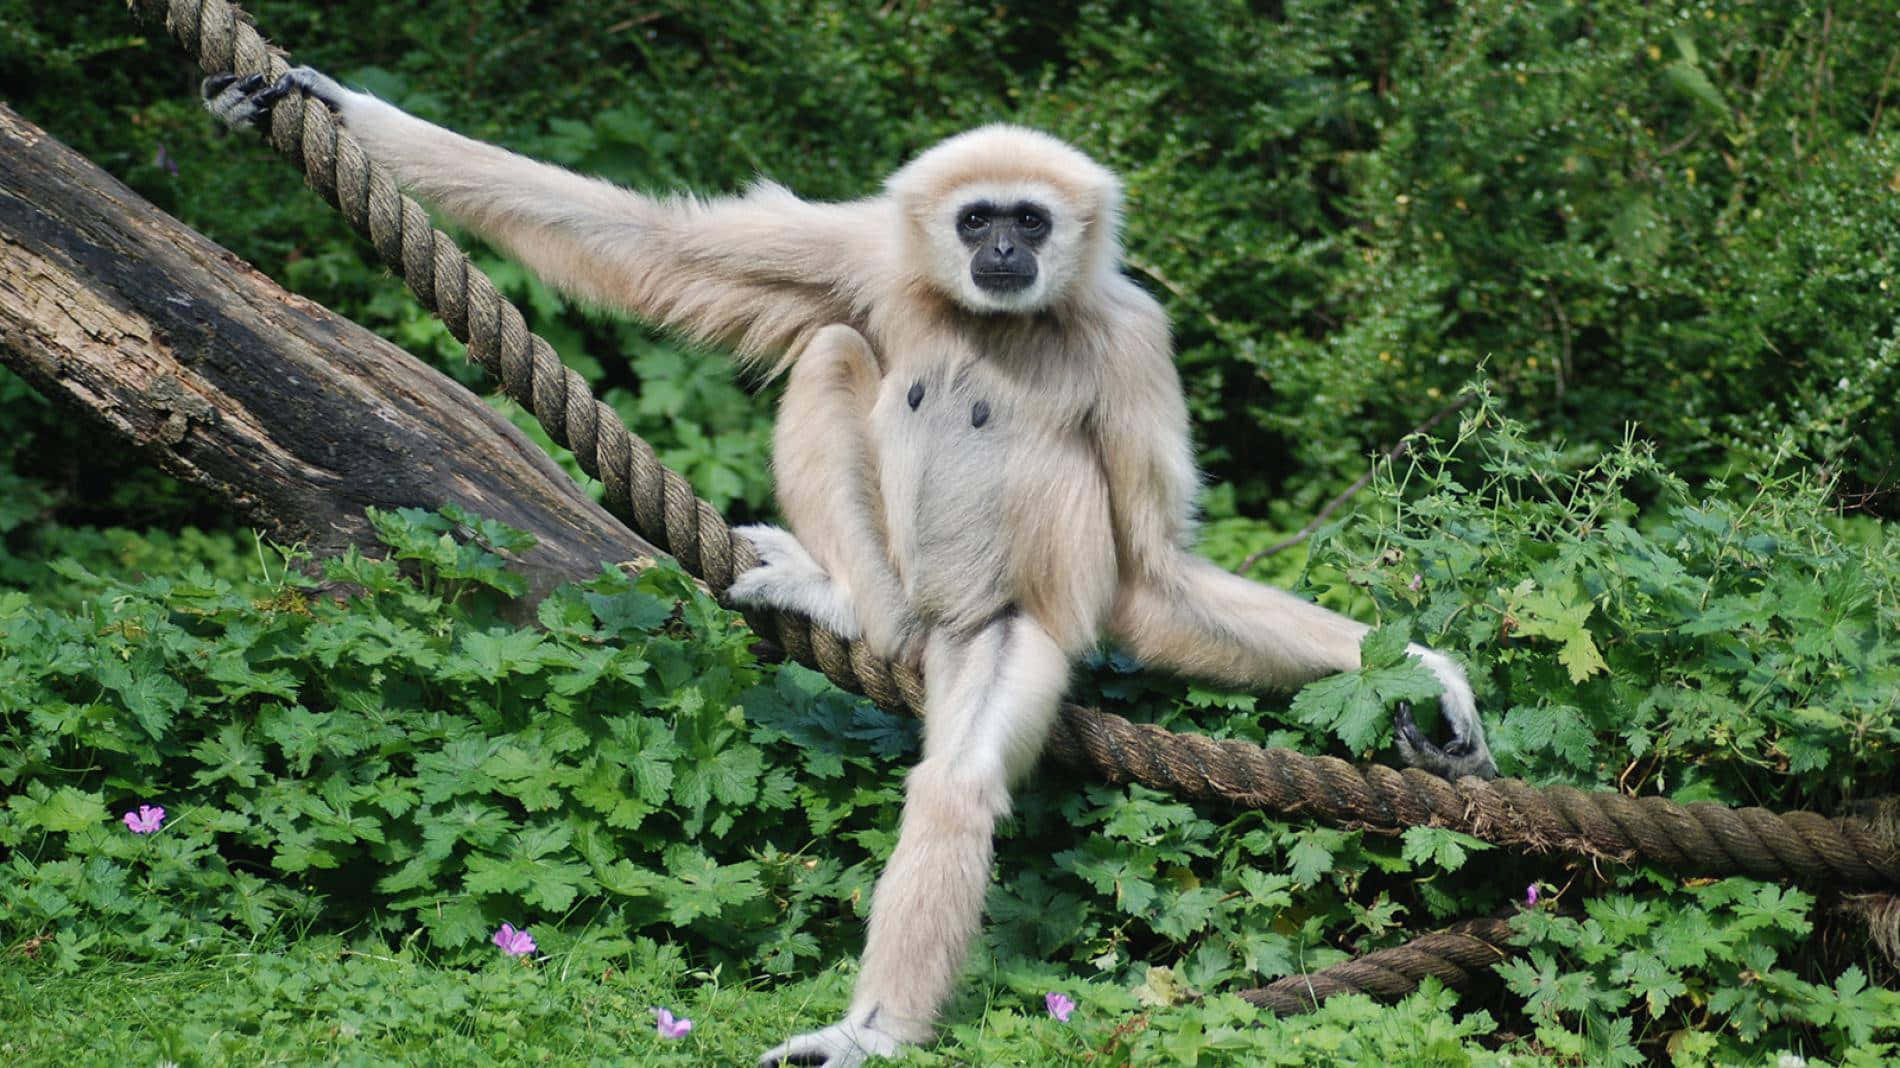 A close-up of a Hd Gibbon swinging through a jungle